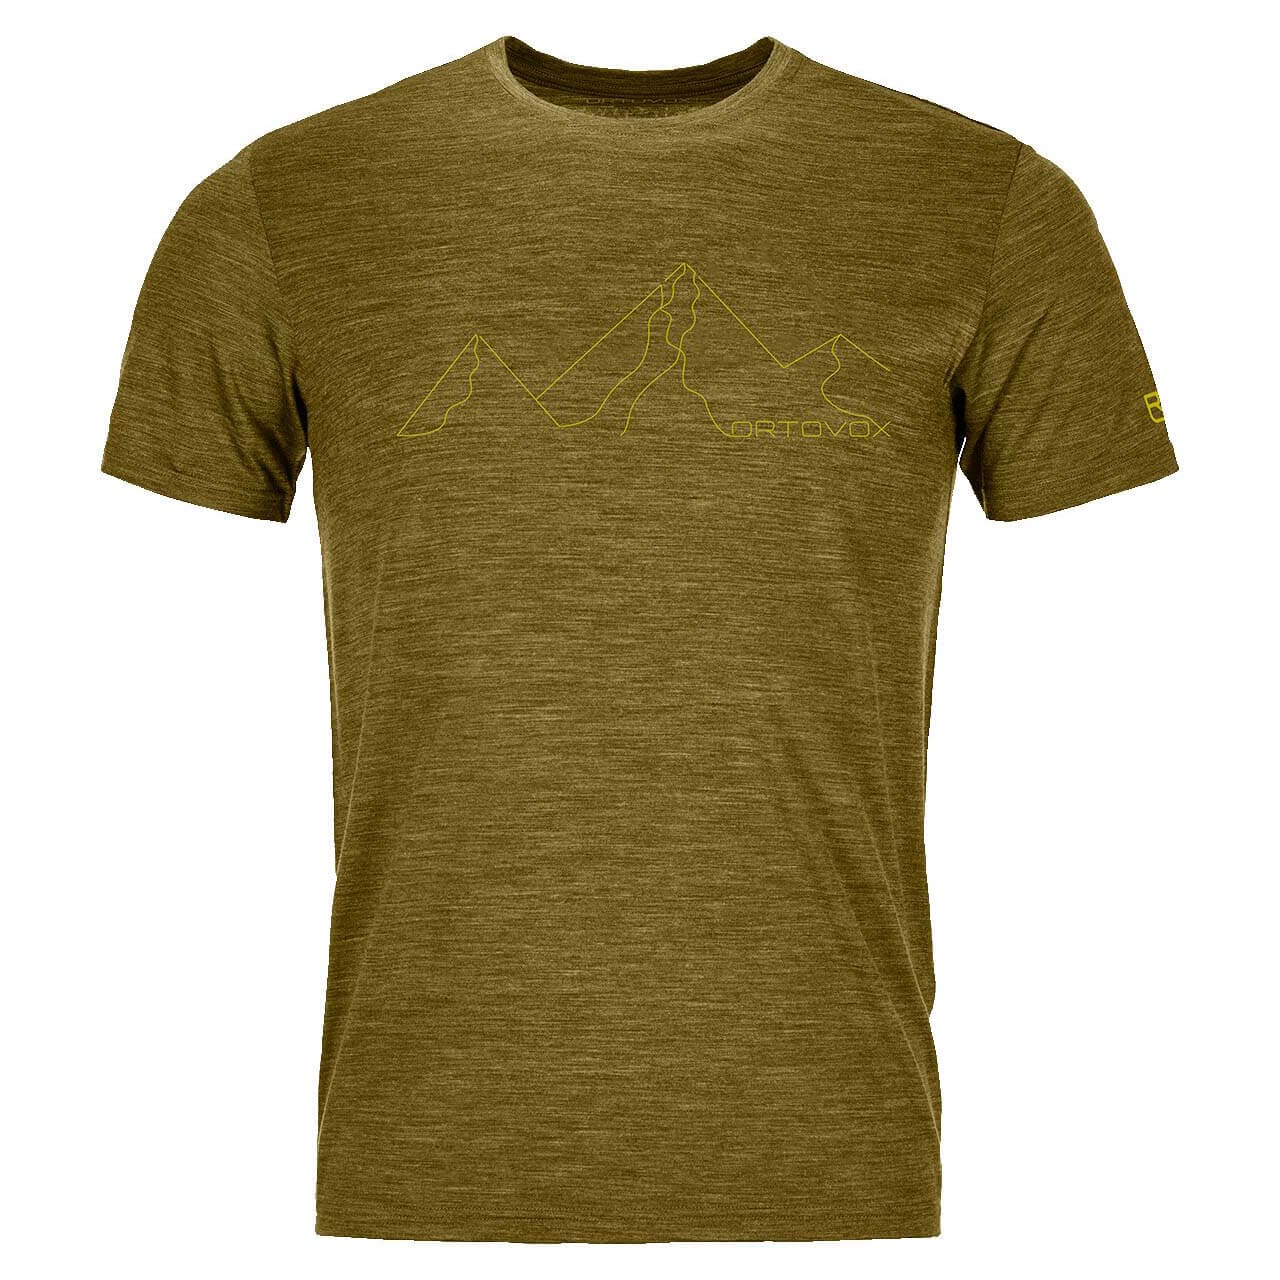 Ortovox Mountain T-Shirt 150 Cool - Green Moss Blend, L von Ortovox